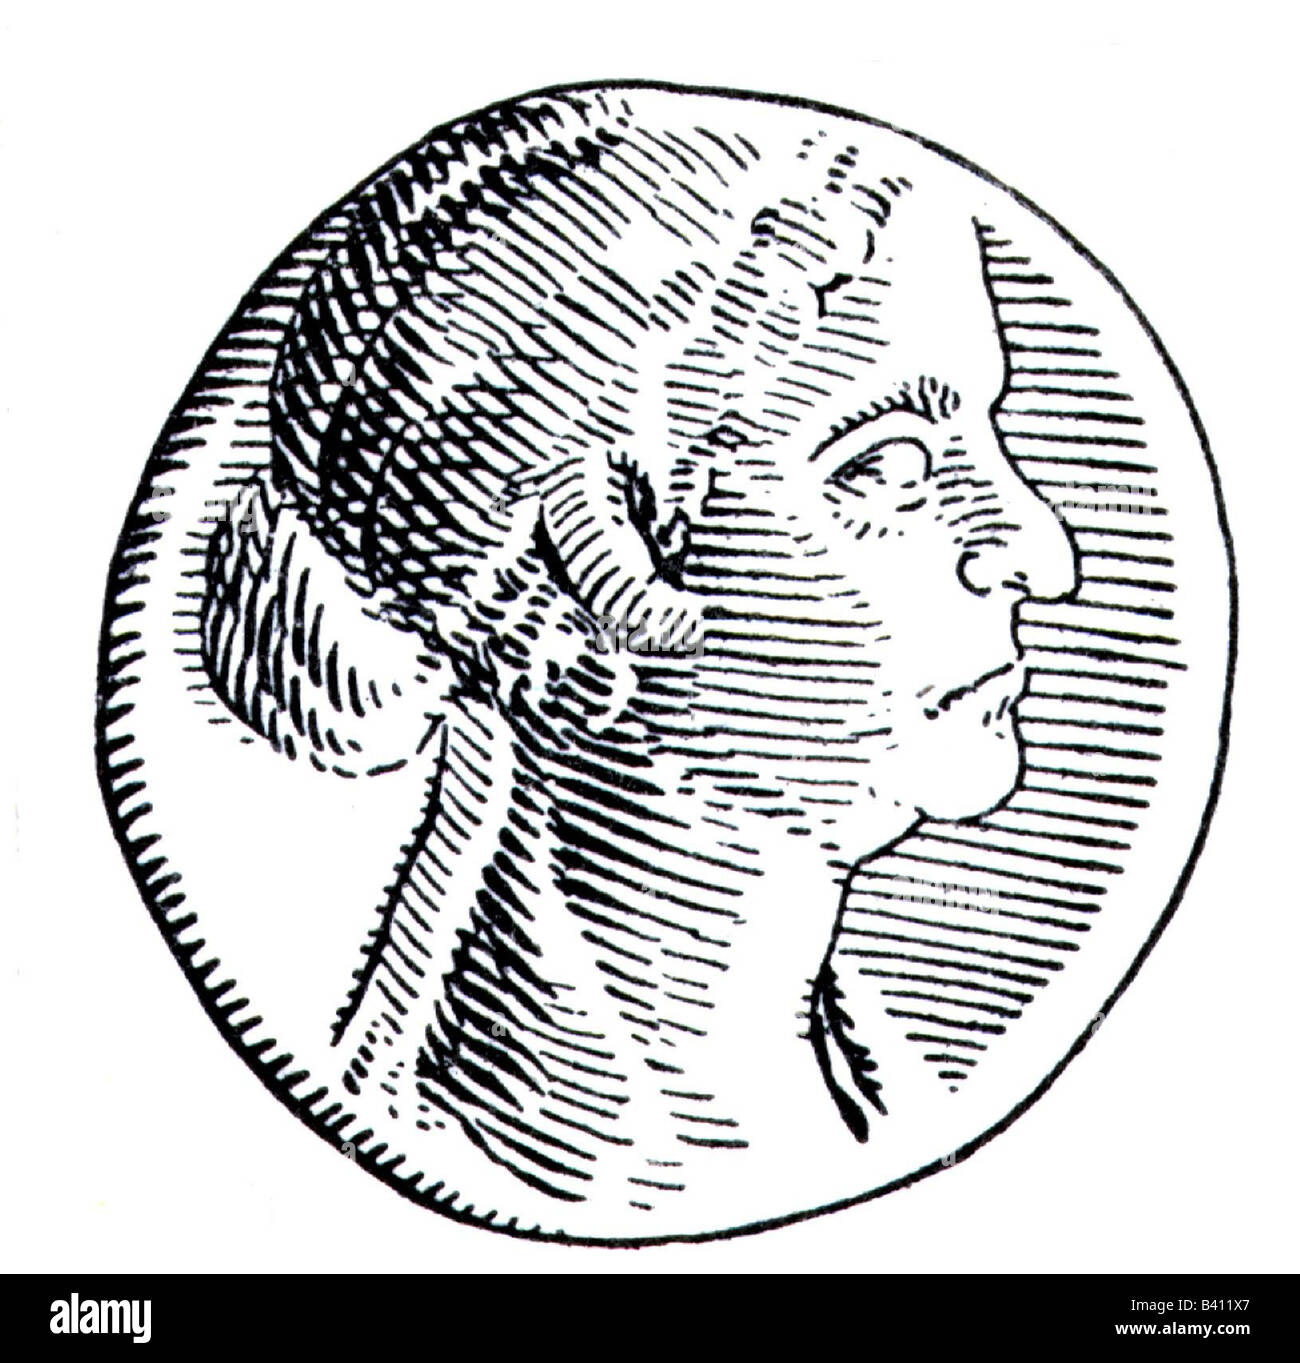 Kleopatra VII. Philopatator "der Große", 69 - 12.8.30 v. Chr., Königin von Ägypten 51 - 30 v. Chr., Porträt, Holzgravur nach antiker Münze, Stockfoto